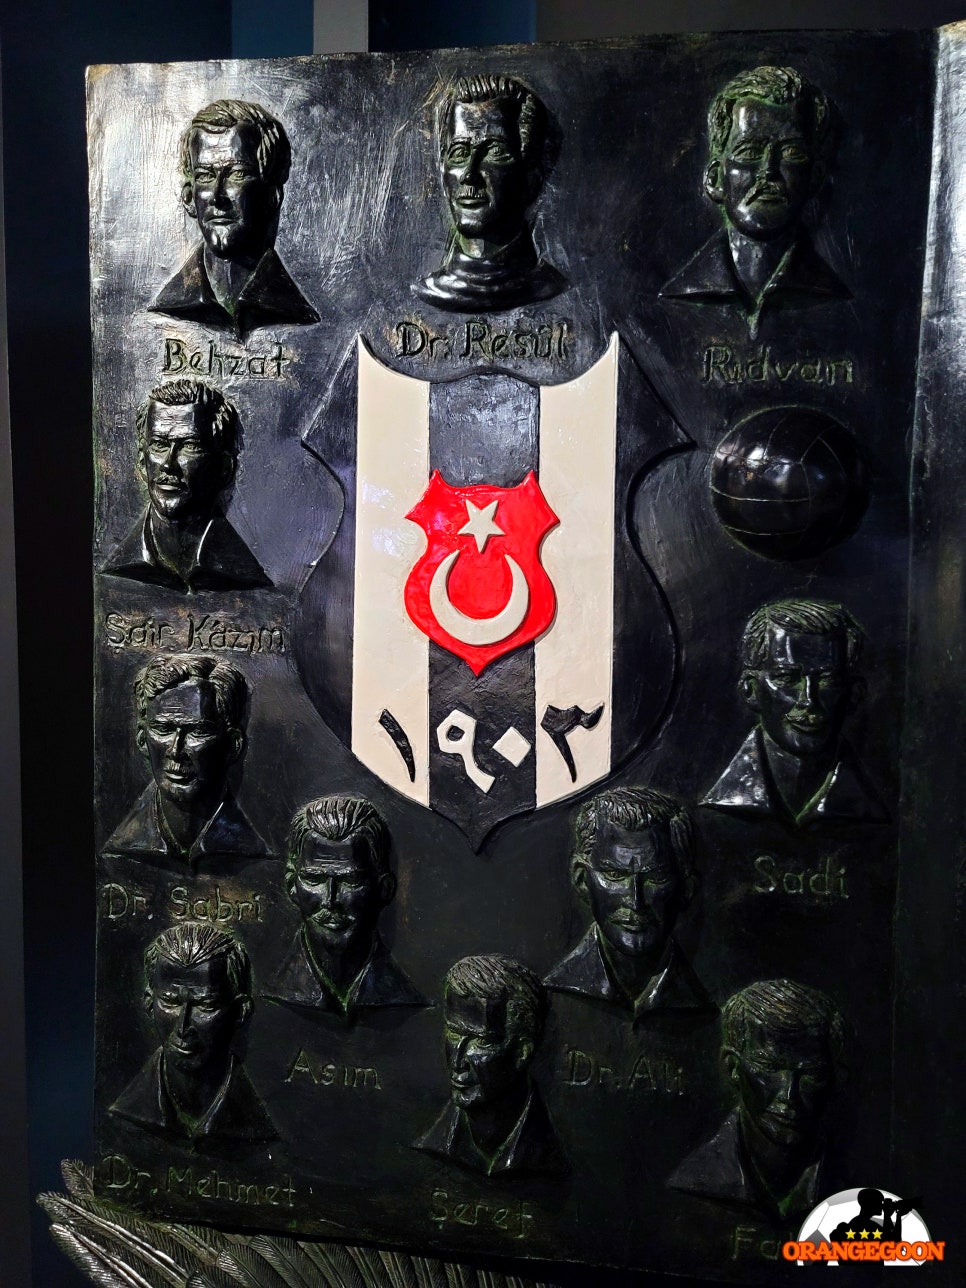 [FOOTBALL MUSEUM * 튀르키예 이스탄불] 이스탄불을 지배하는 검은 독수리! 쉬페르리그의 명문. 베식타쉬 JK 축구 박물관 <4/8> Beşiktaş JK Müzesi